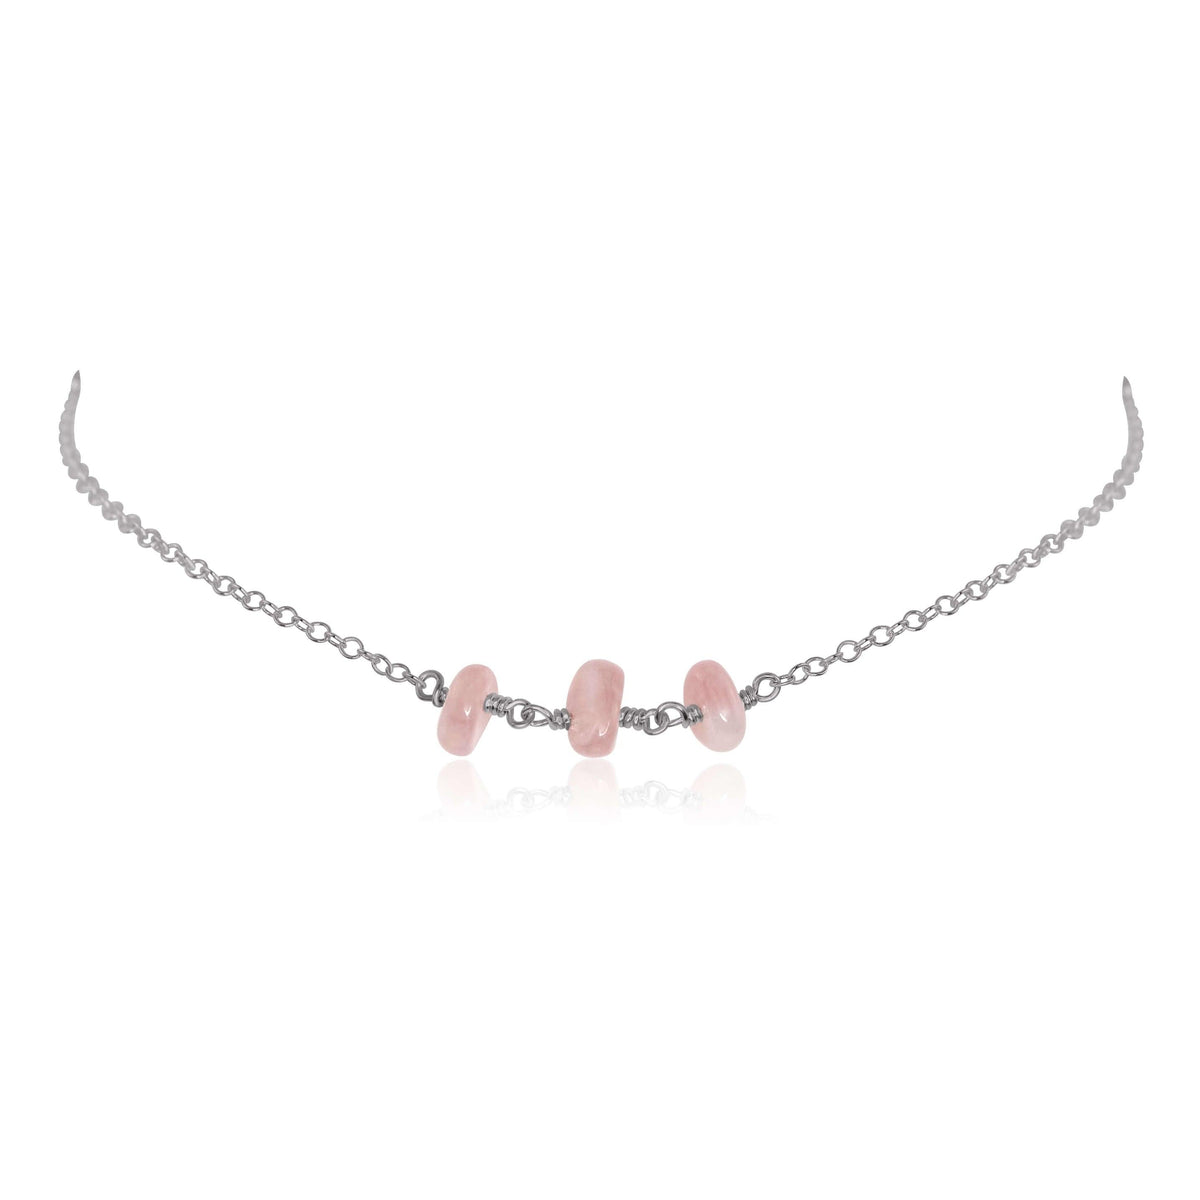 Beaded Chain Choker - Rose Quartz - Stainless Steel - Luna Tide Handmade Jewellery